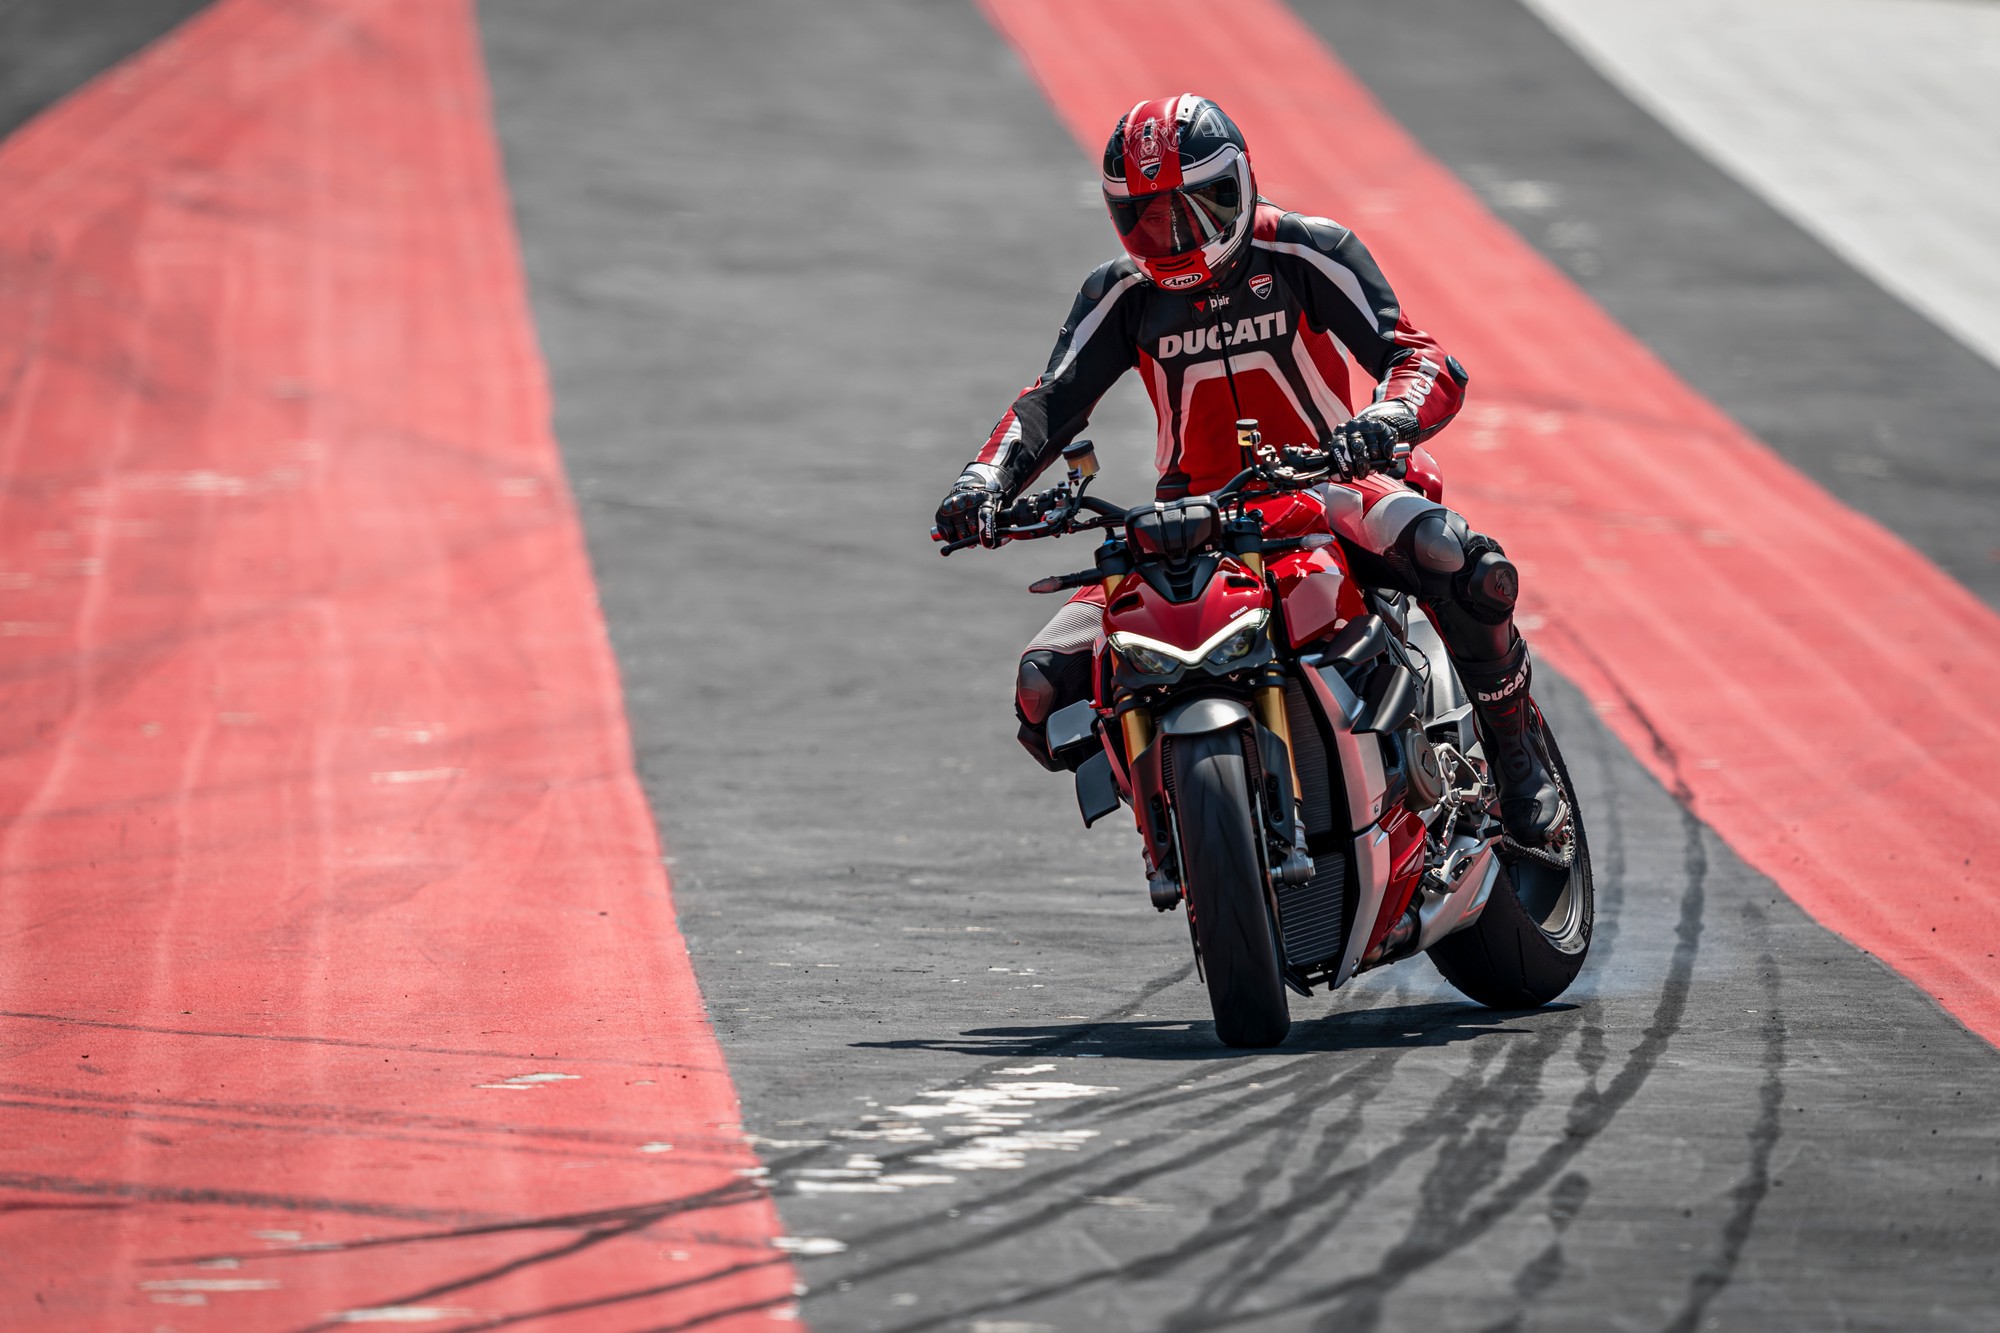 Ducati Street Fighter V4S 2020